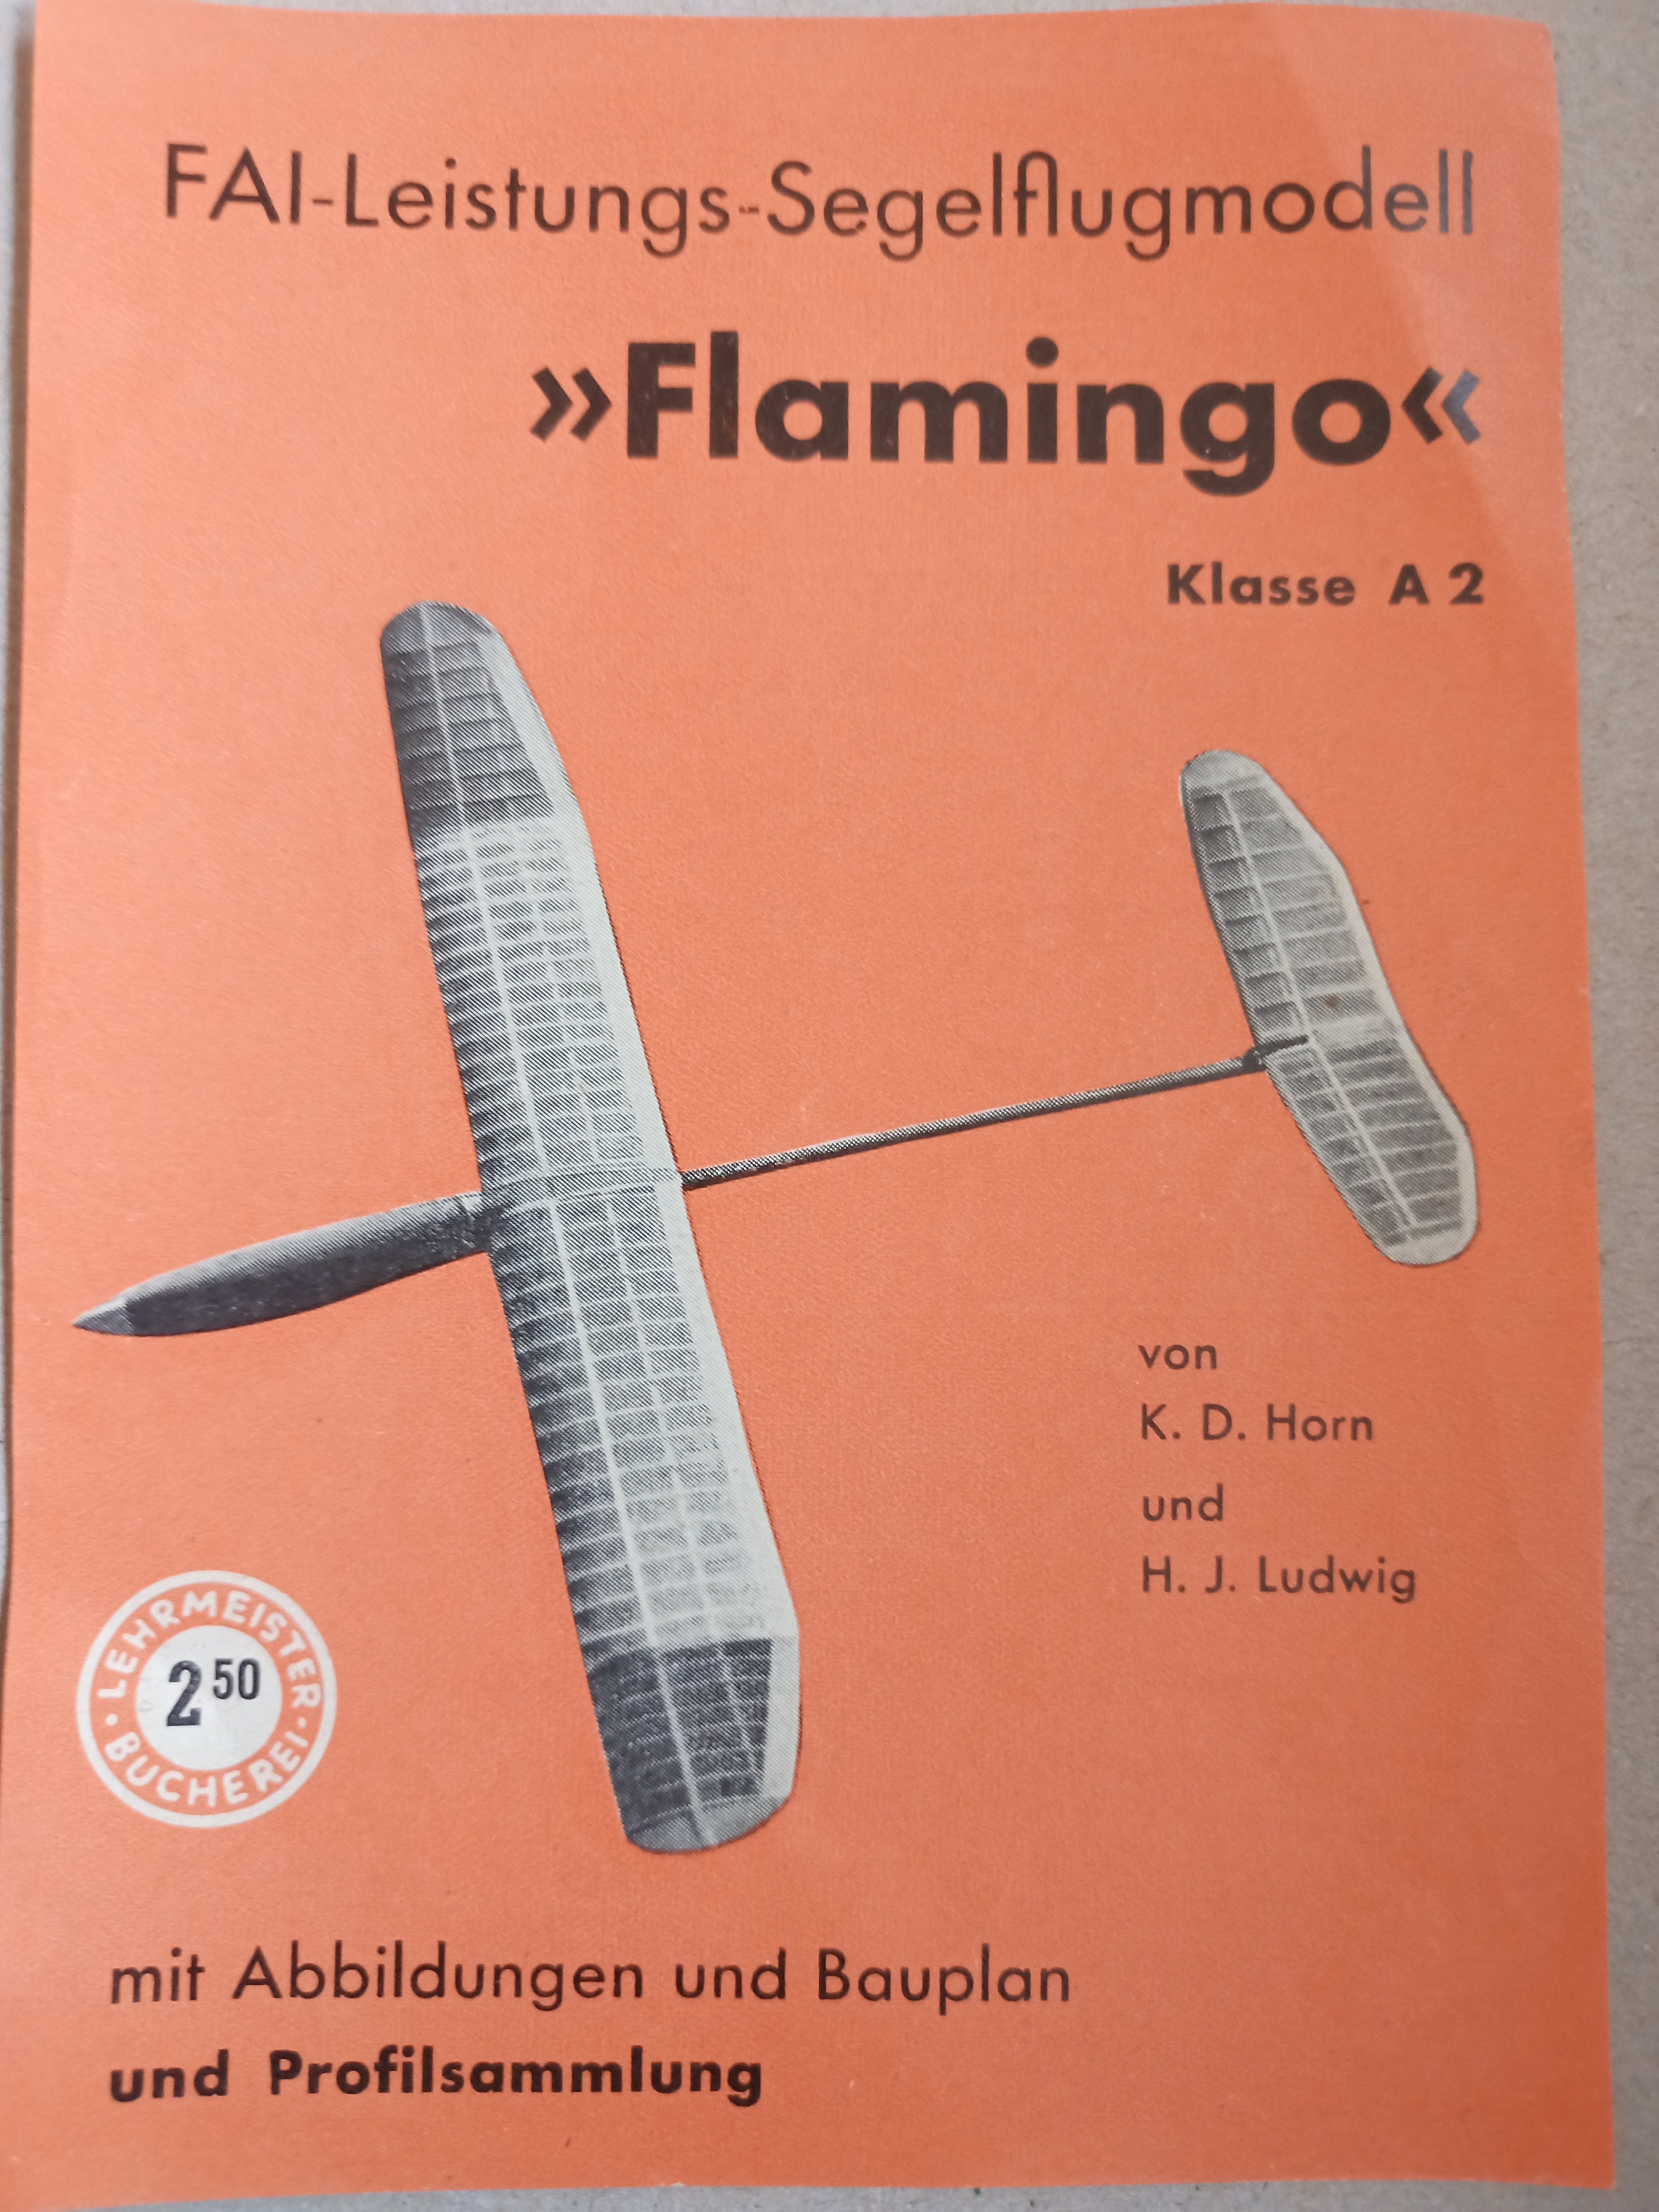 Flamingo A2 (Deutsches Segelflugmuseum mit Modellflug CC BY-NC-SA)